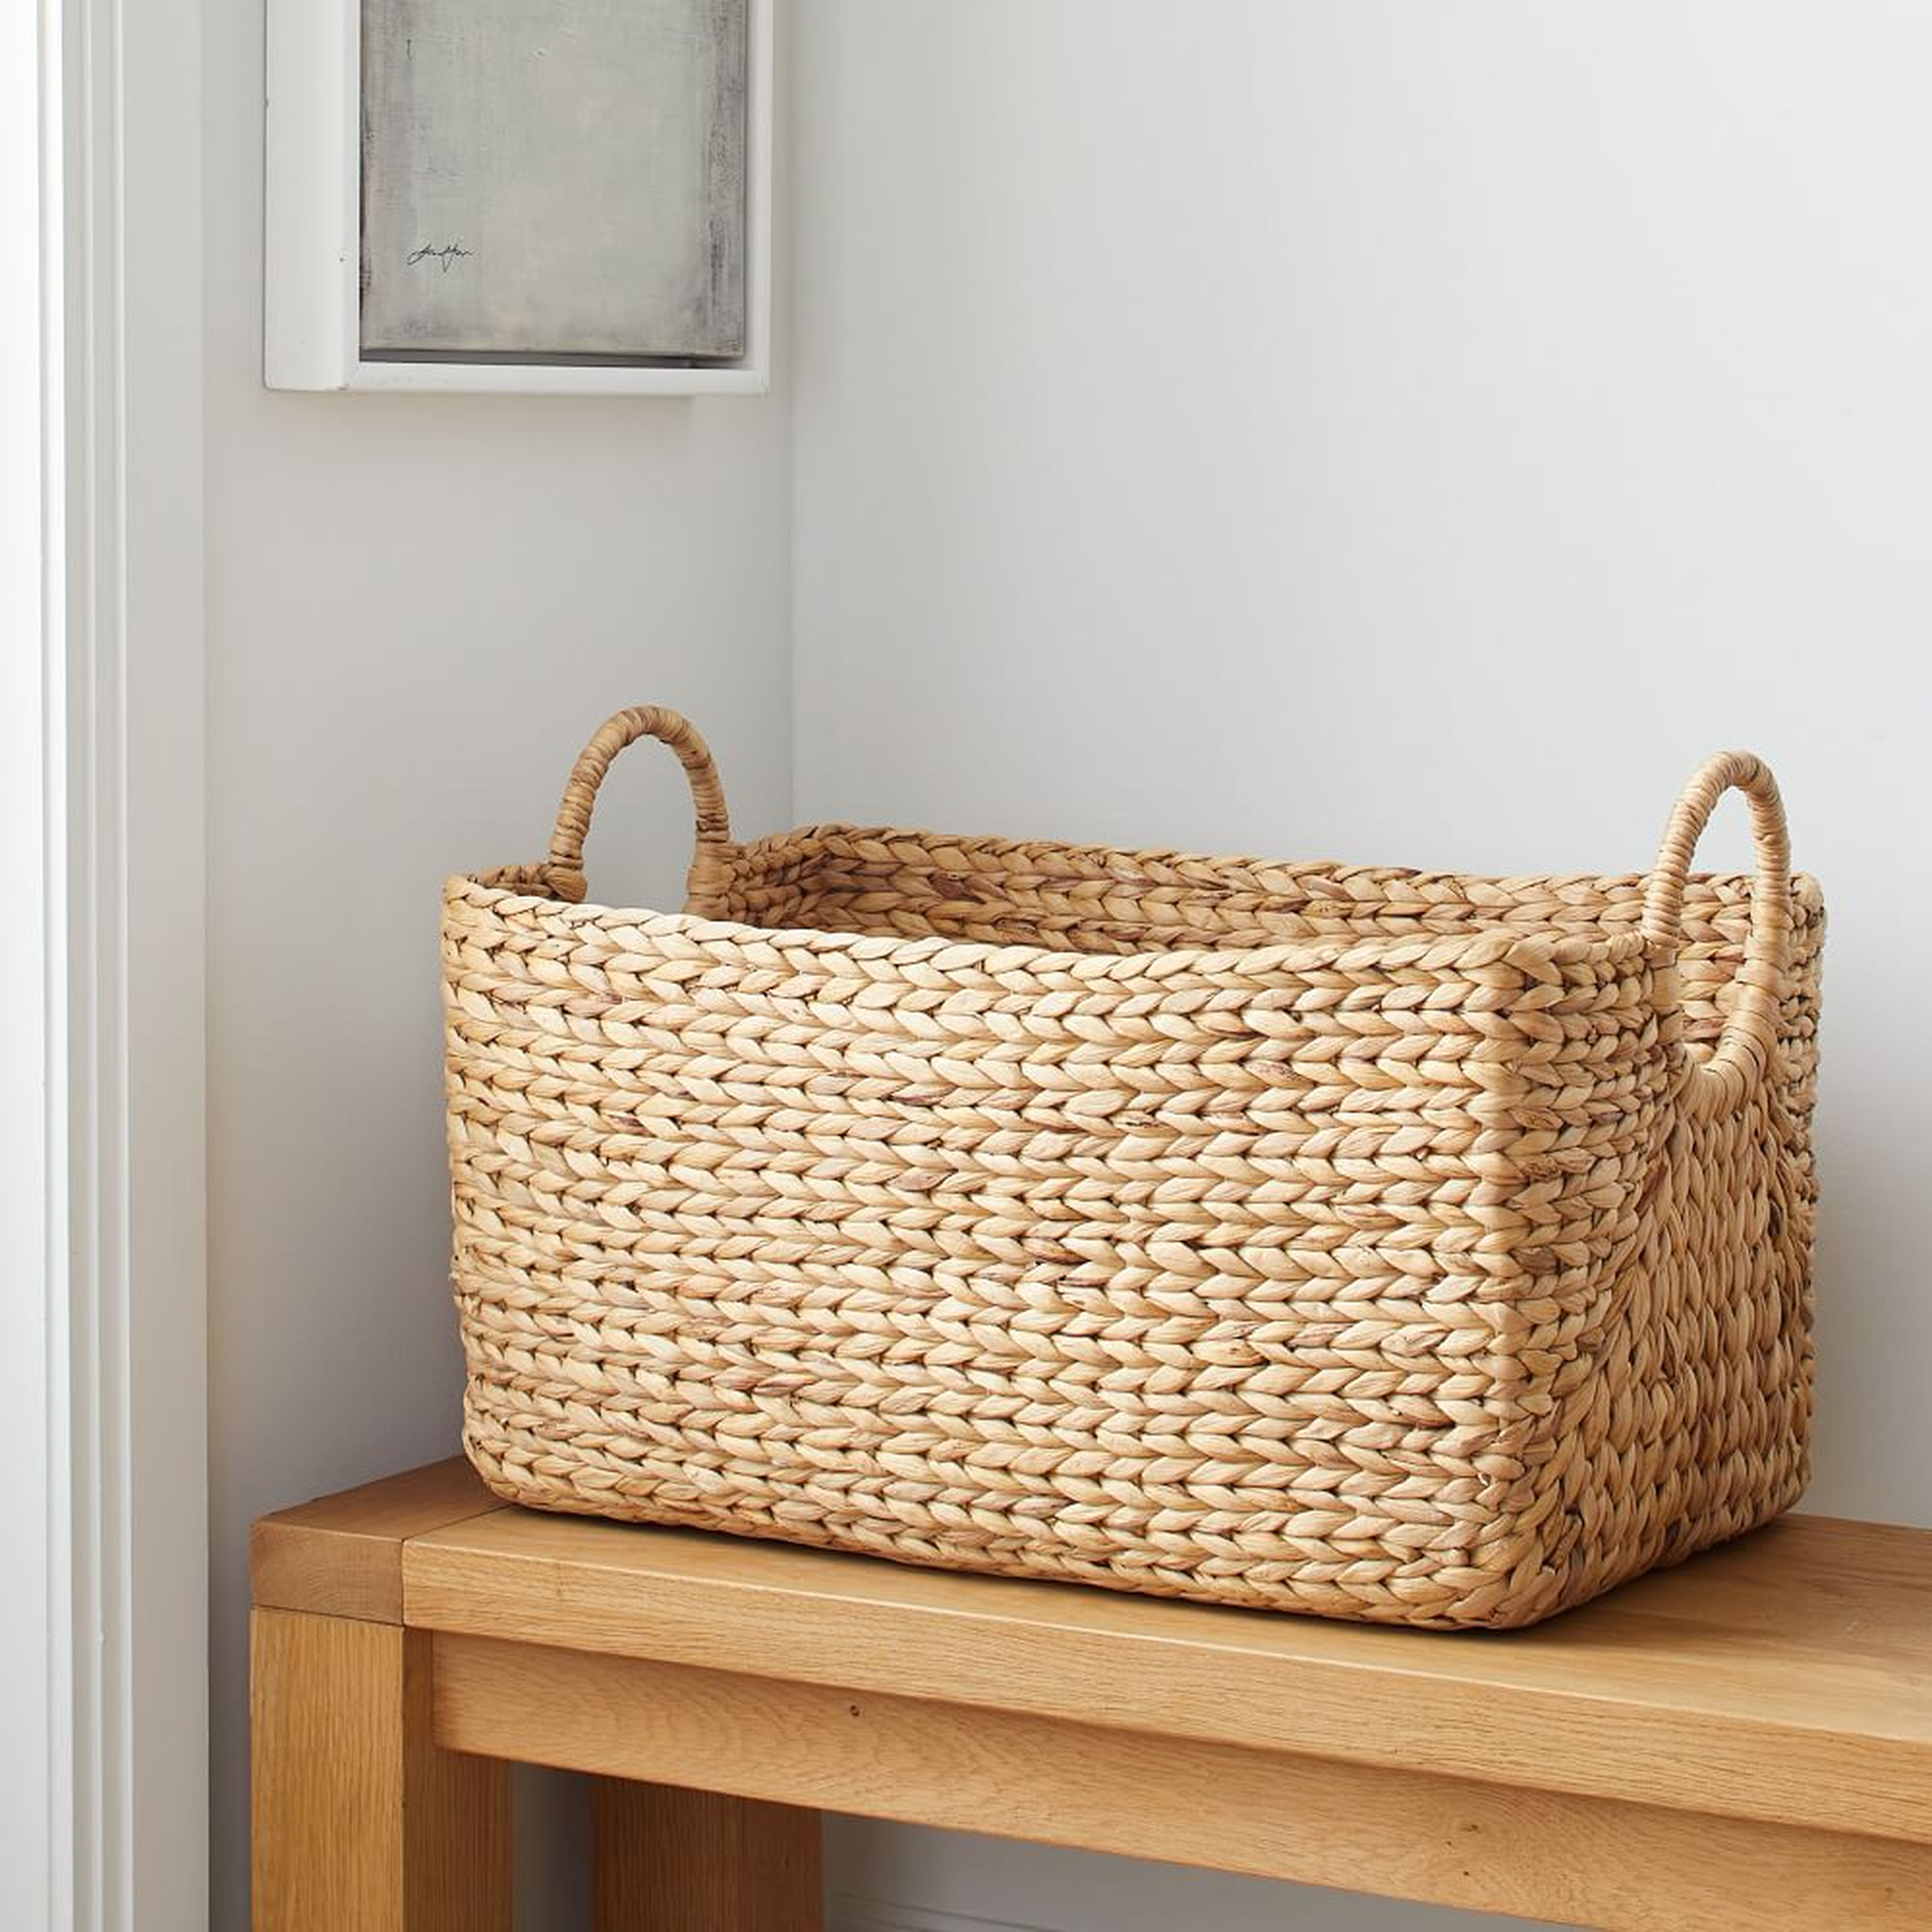 Curved Seagrass Basket, Utility Handle Baskets, Medium, 14.6"W x 24.4"D x 14.4"H - West Elm